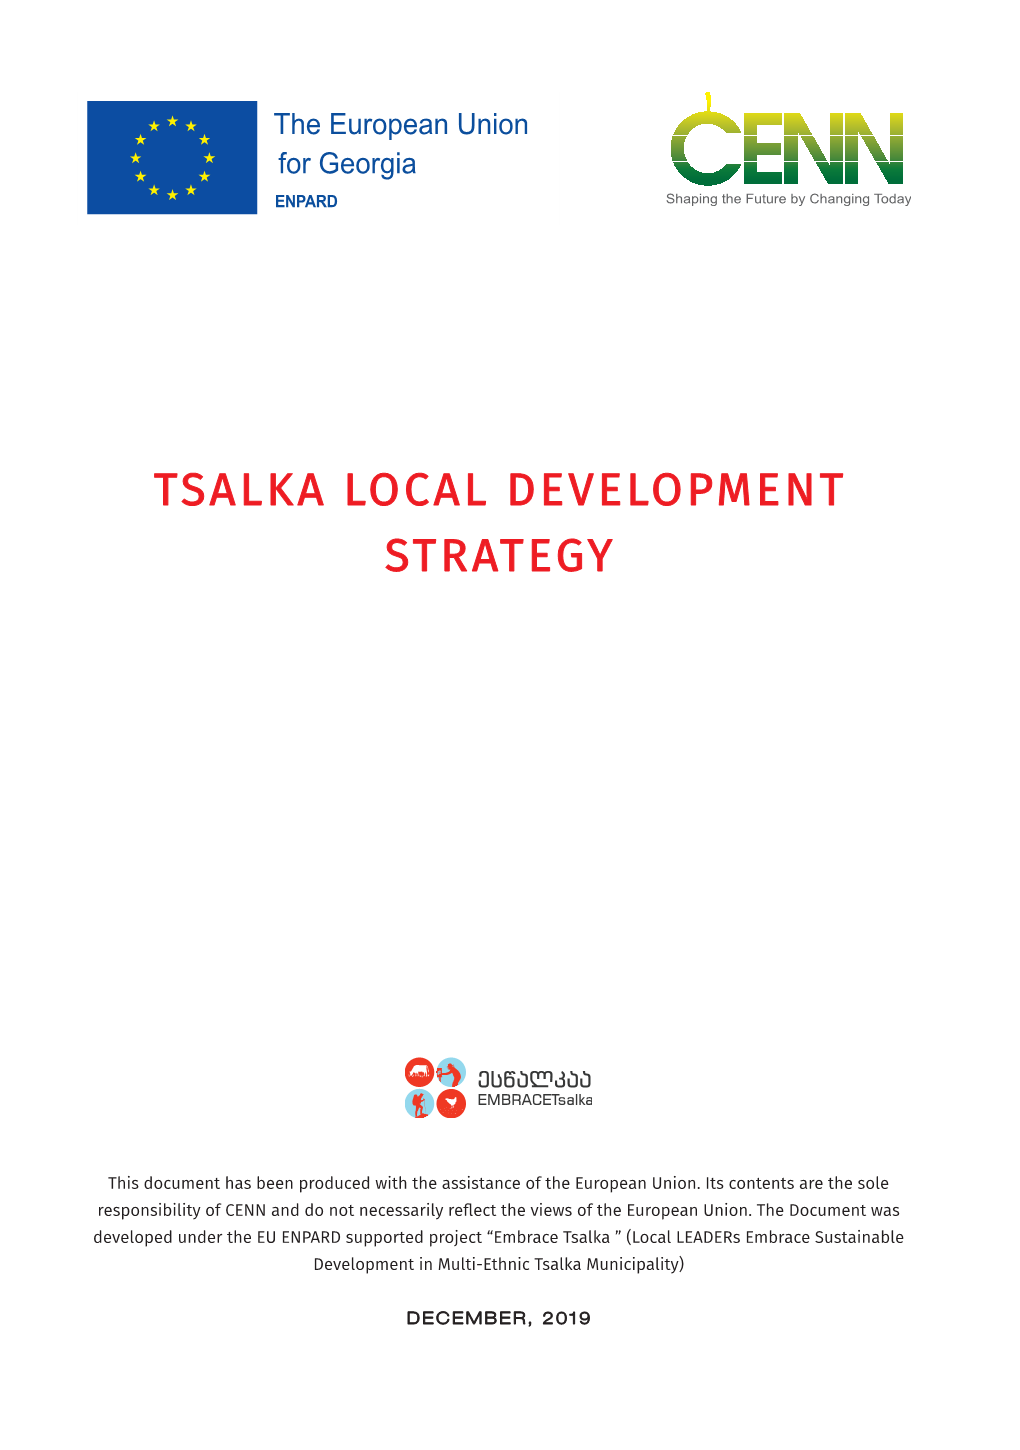 Tsalka Local Development Strategy